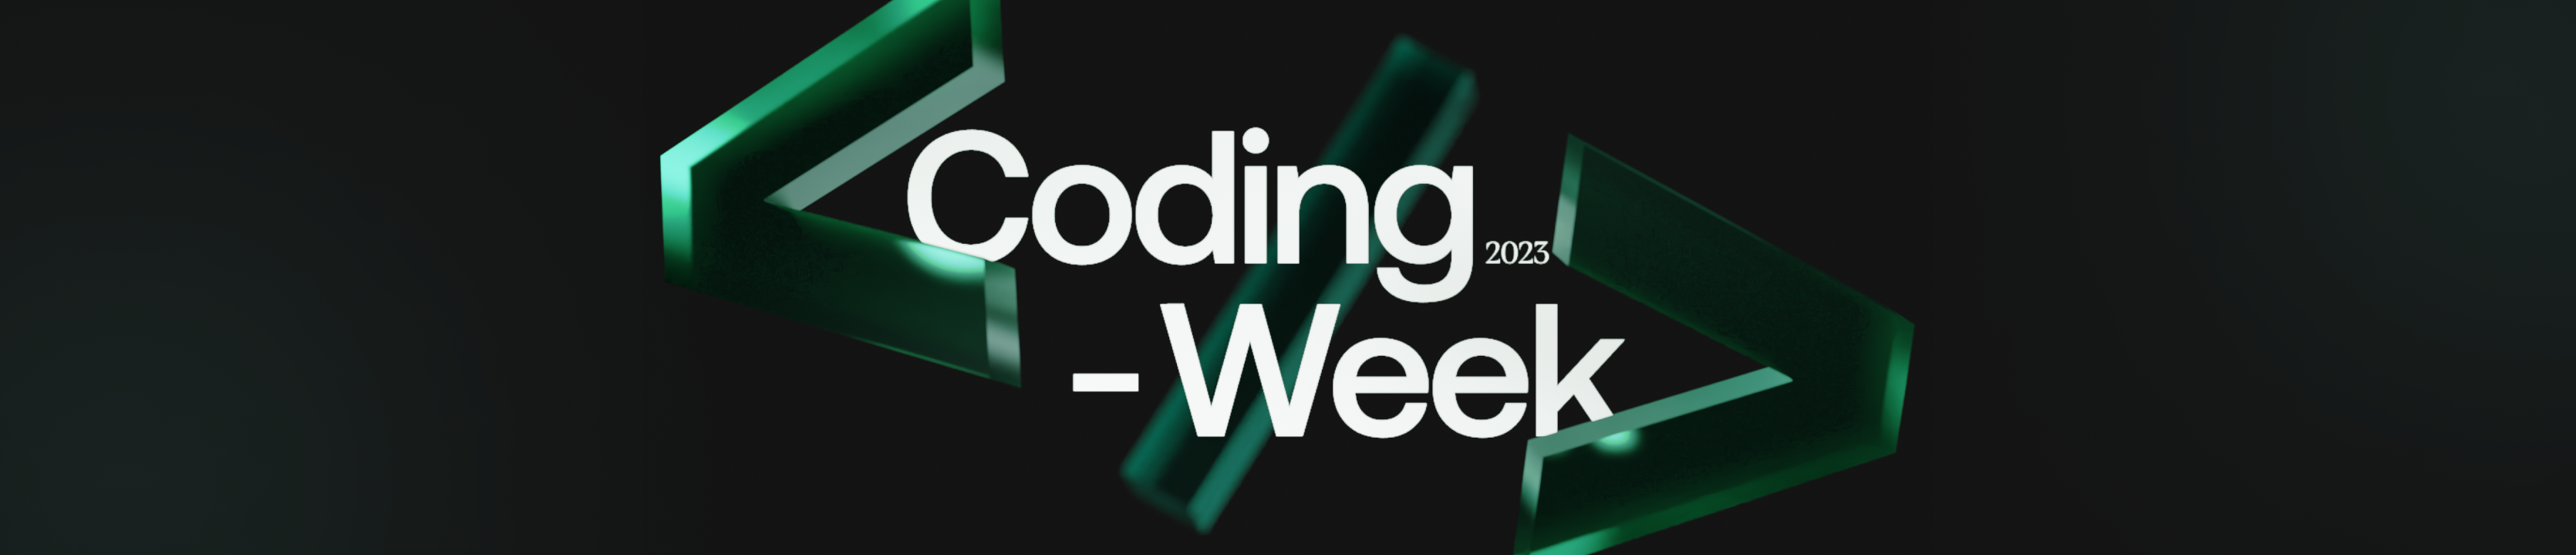 Coding_Week